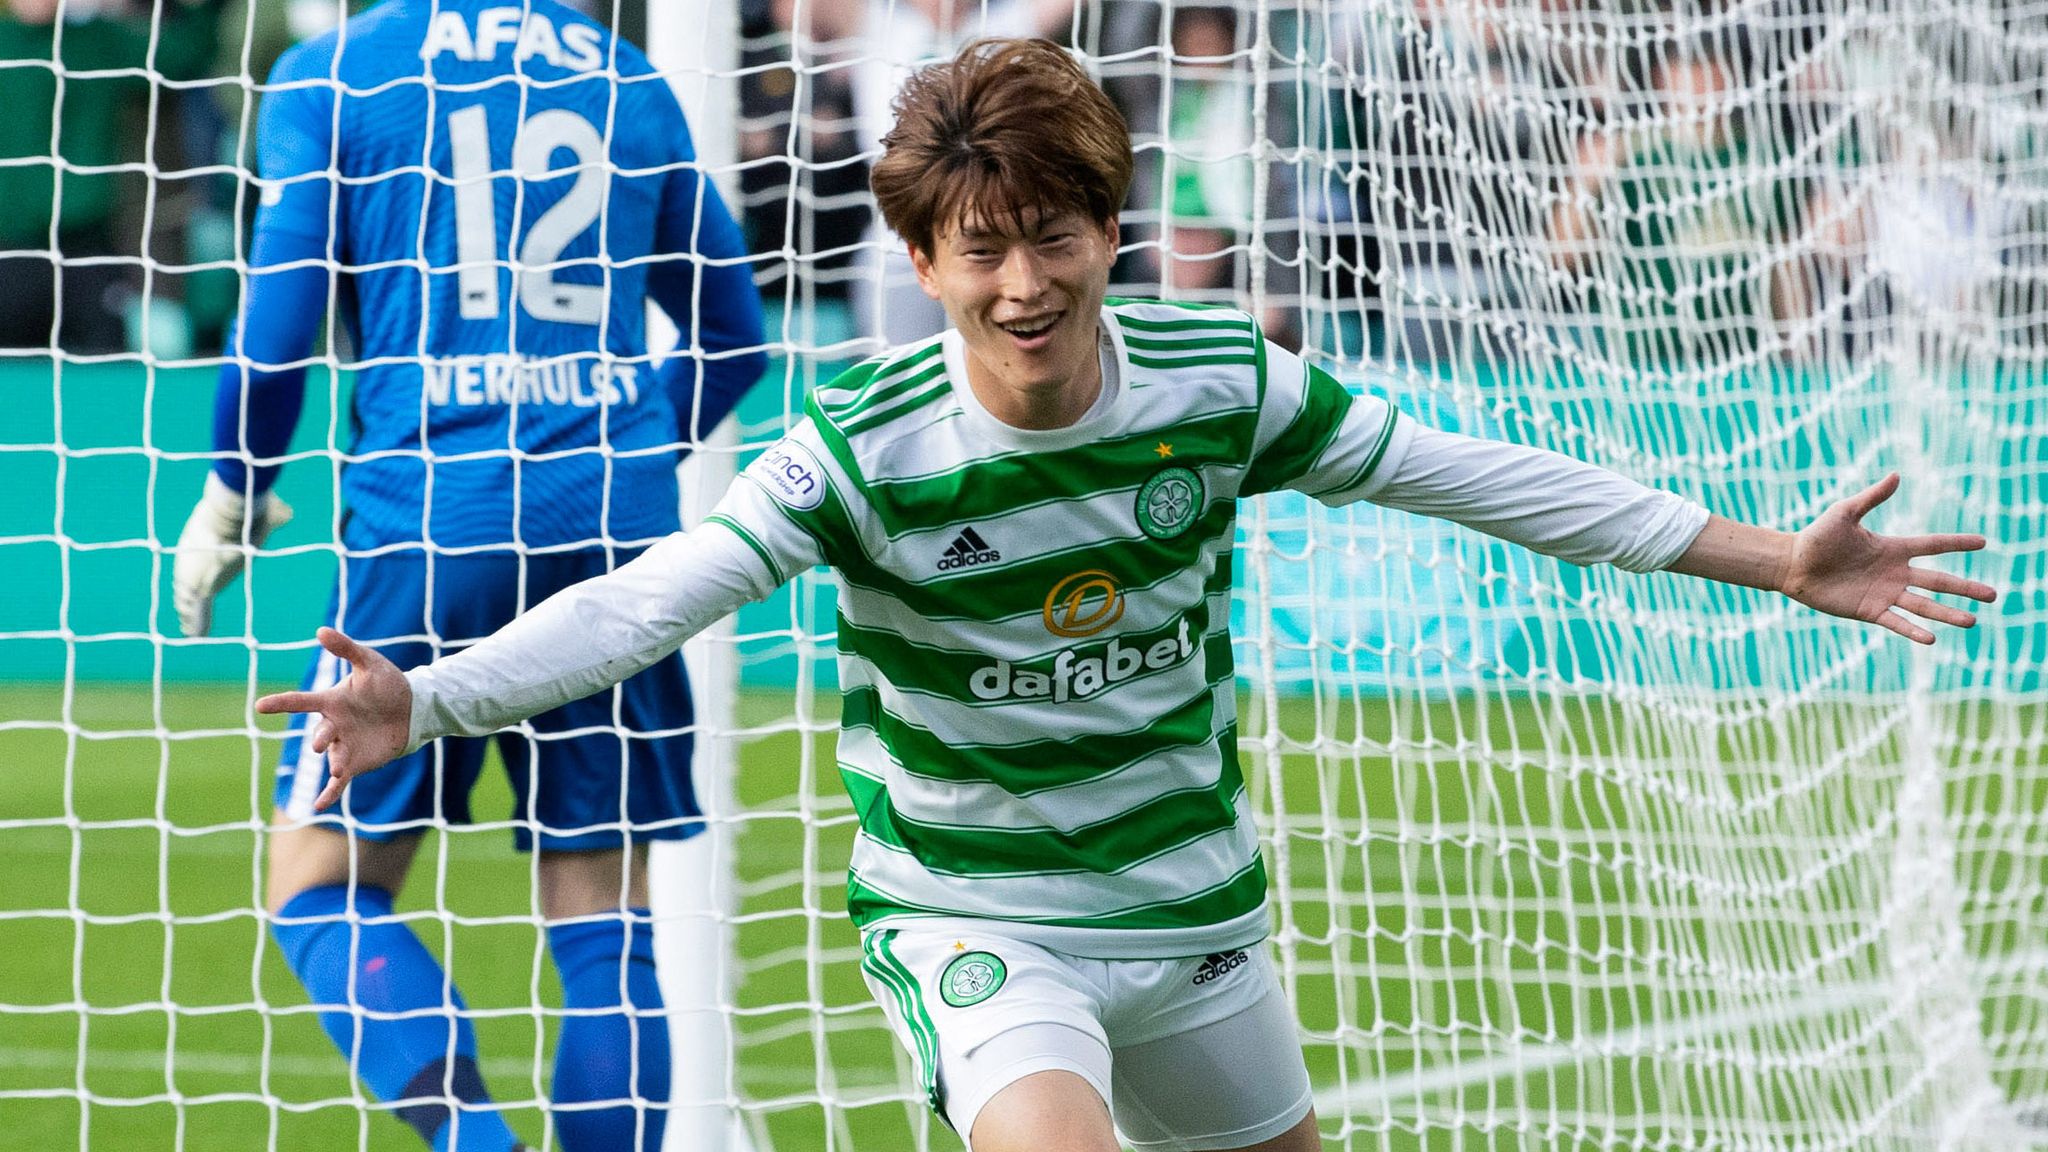 Kyogo Furuhashi is leading a new Celtic era as Ange ball finally